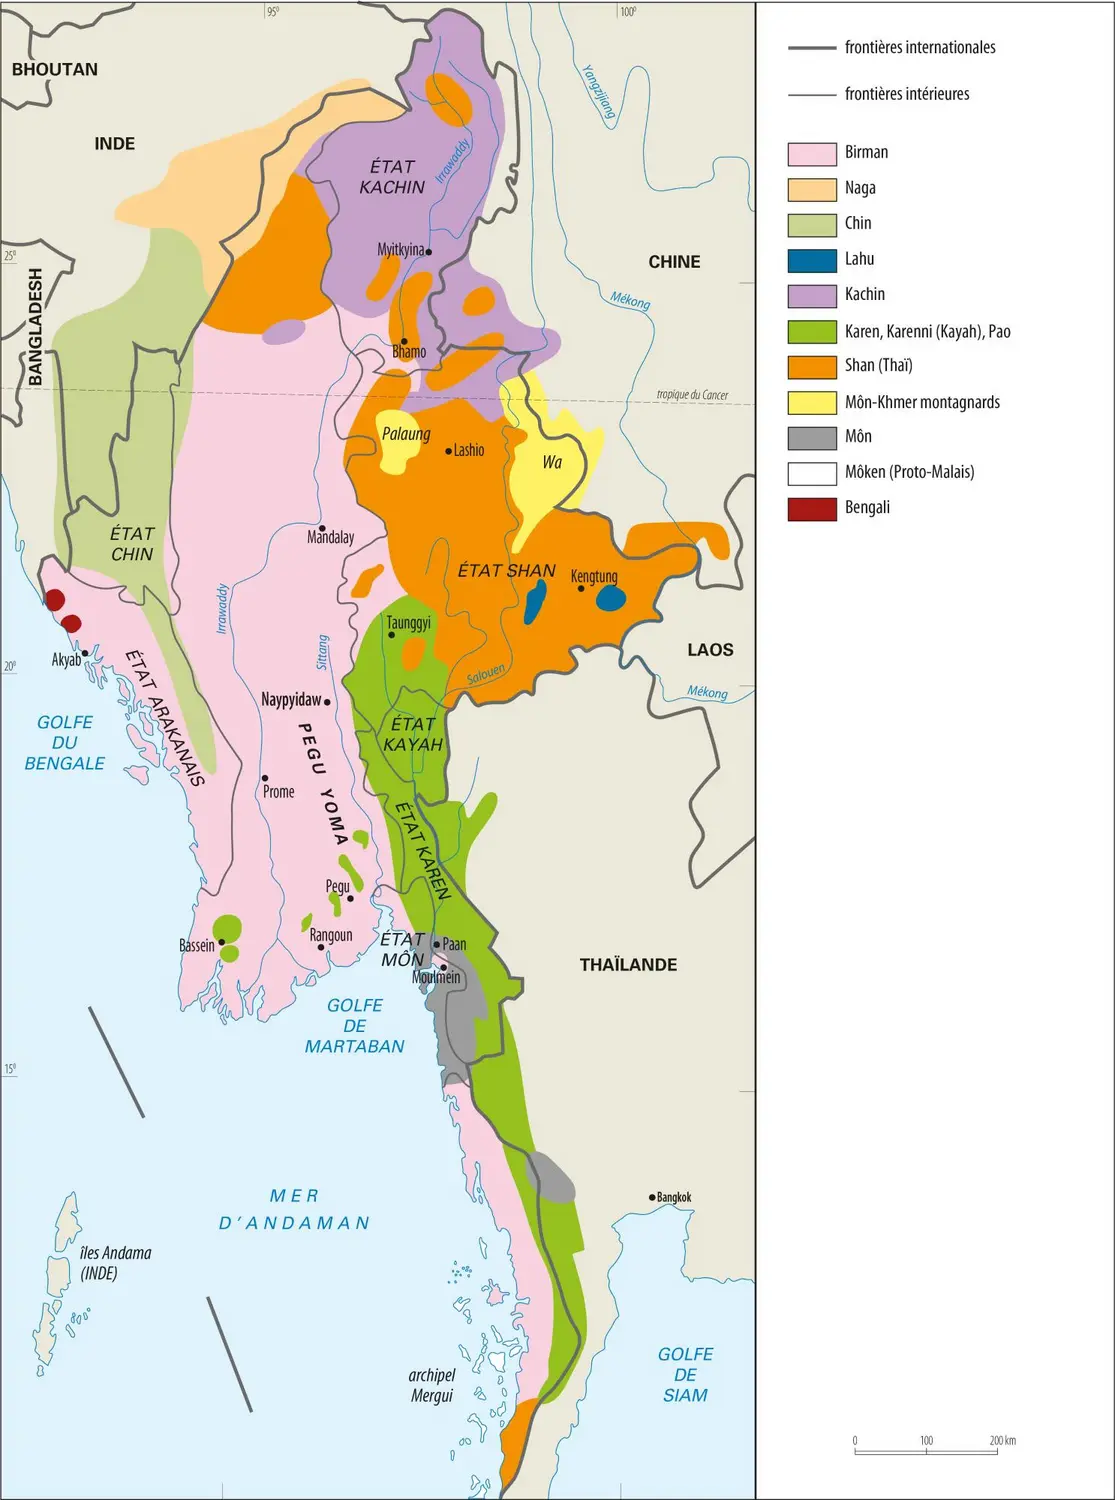 Birmanie : divisions administratives et peuplement